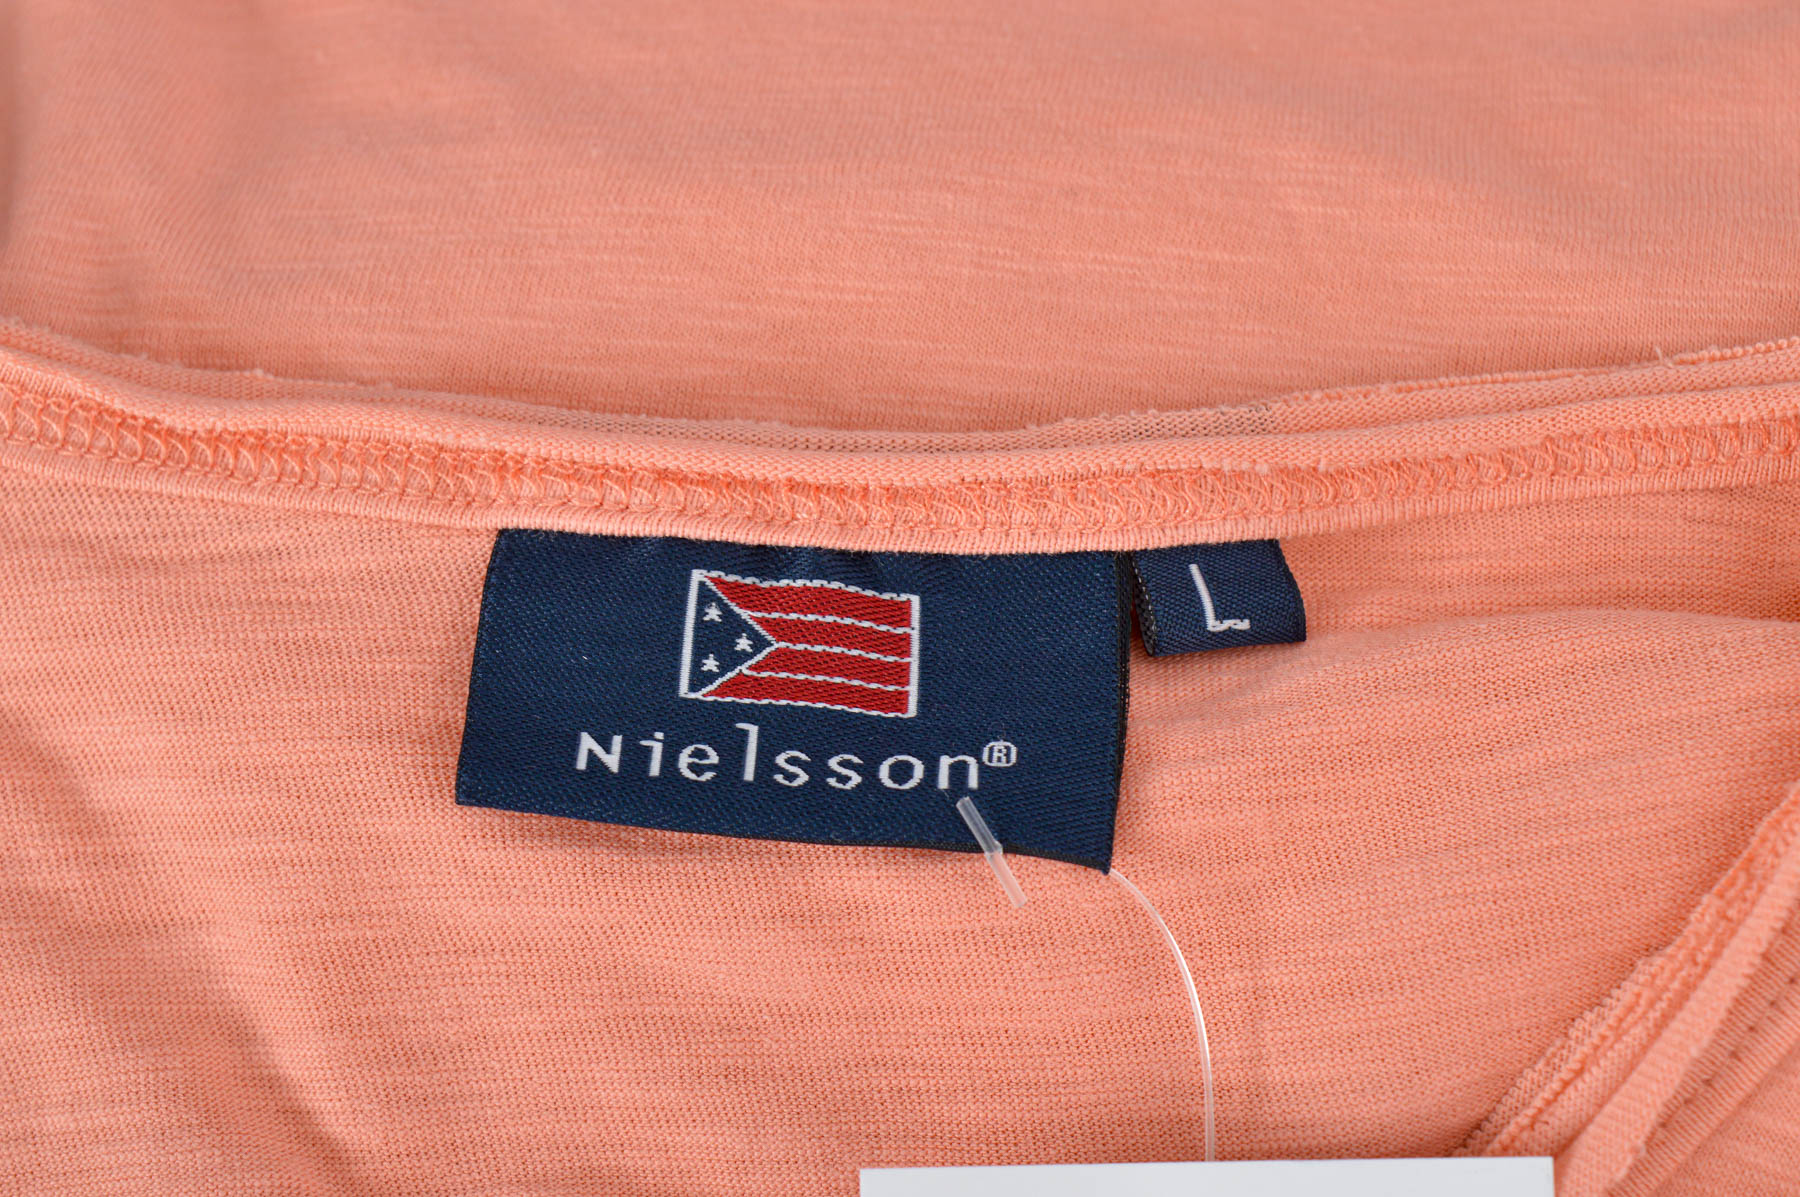 Women's t-shirt - Nielsson - 2